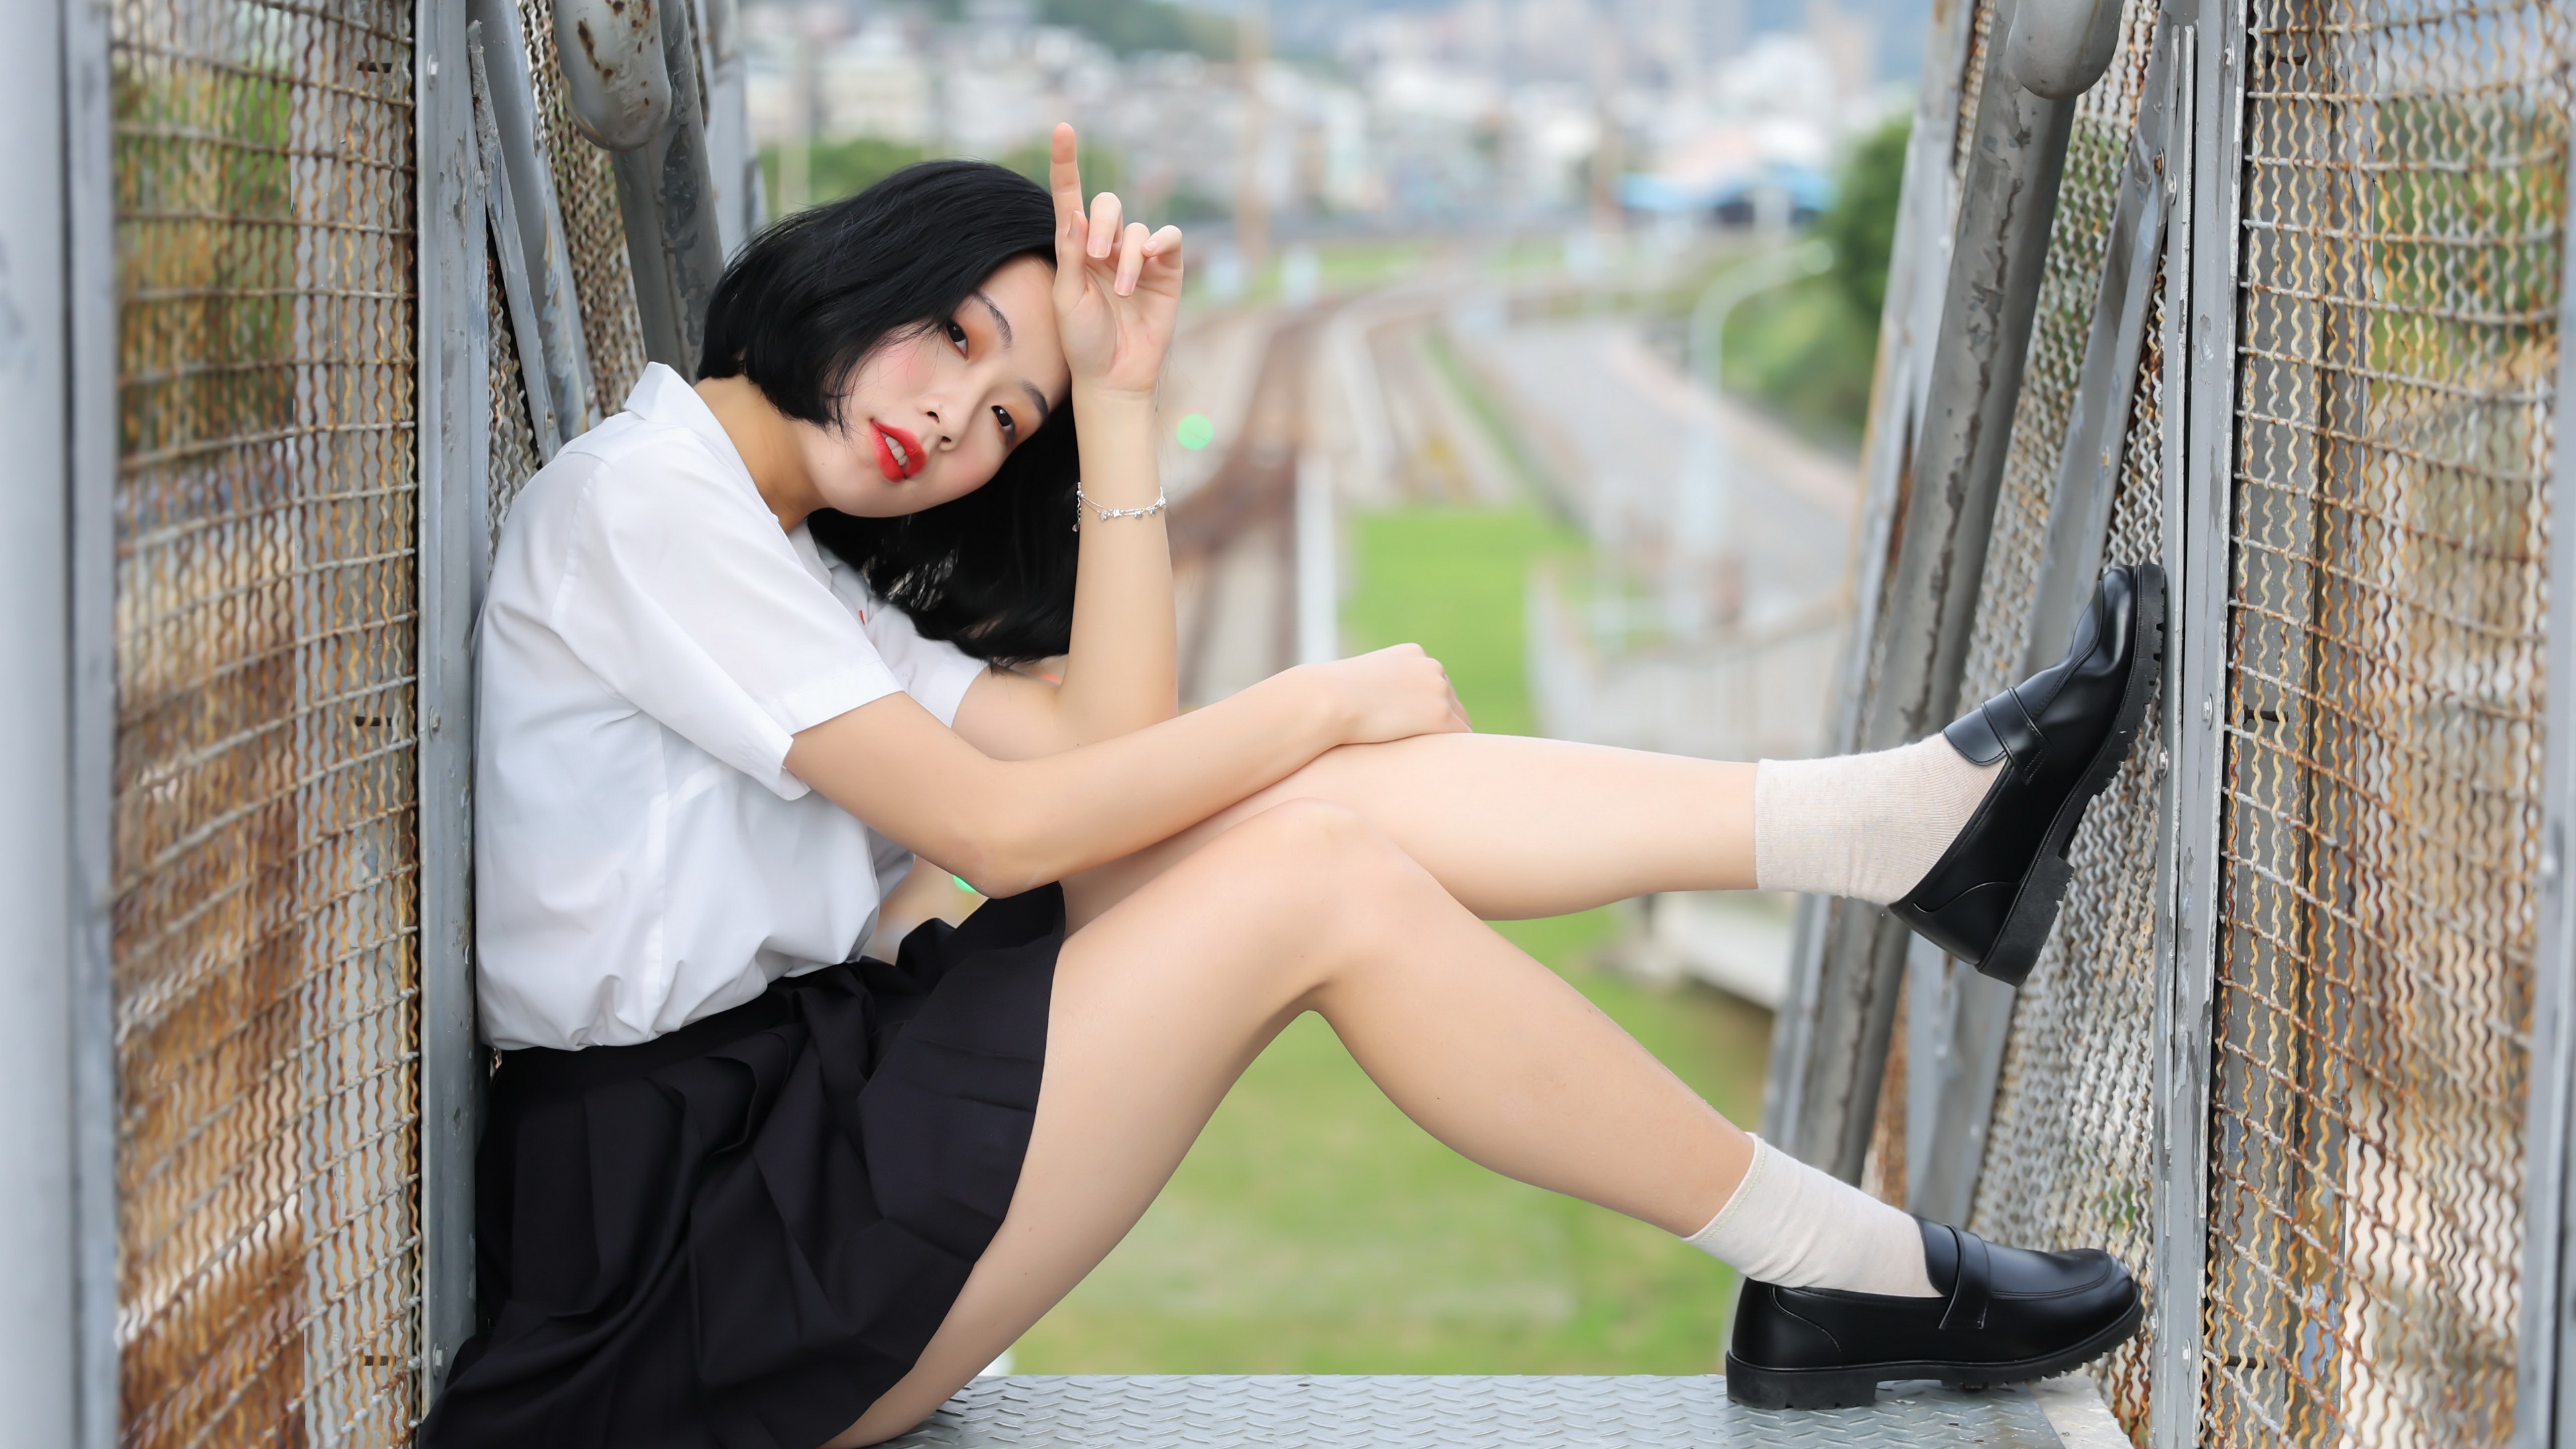 People 3840x2160 Asian women model sitting black hair makeup red lipstick looking at viewer thighs legs skirt women outdoors